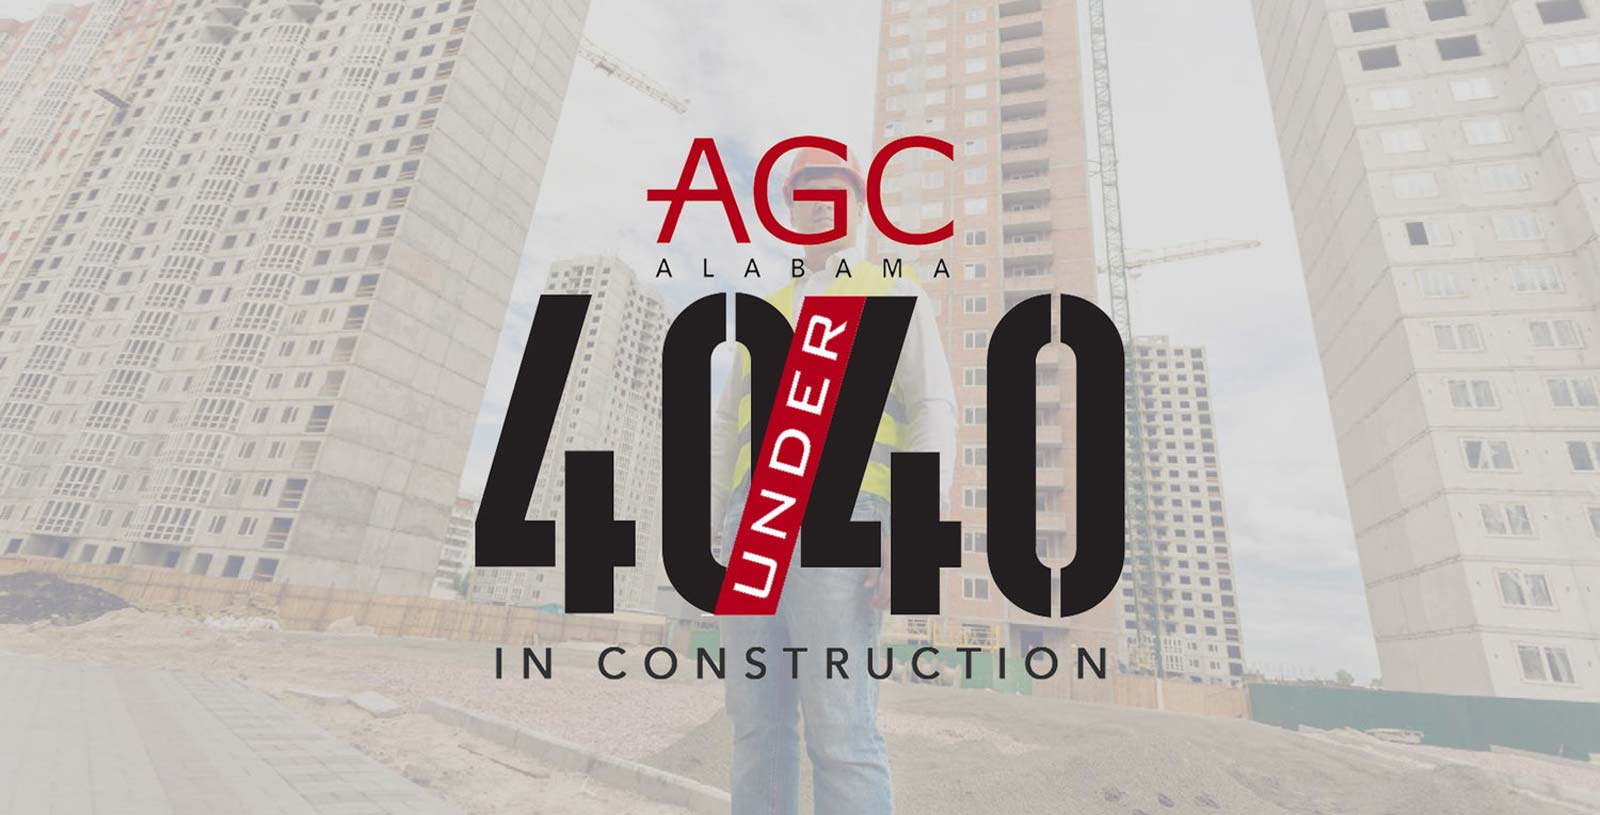 Alabama AGC 40 Under 40 List Named